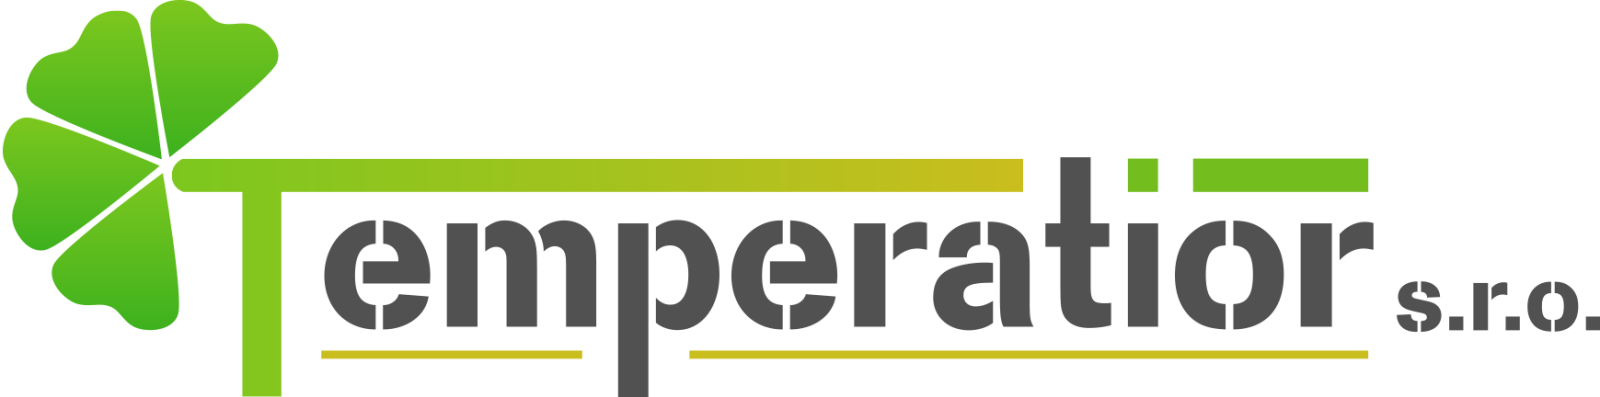 08_Temperatior_logo.png